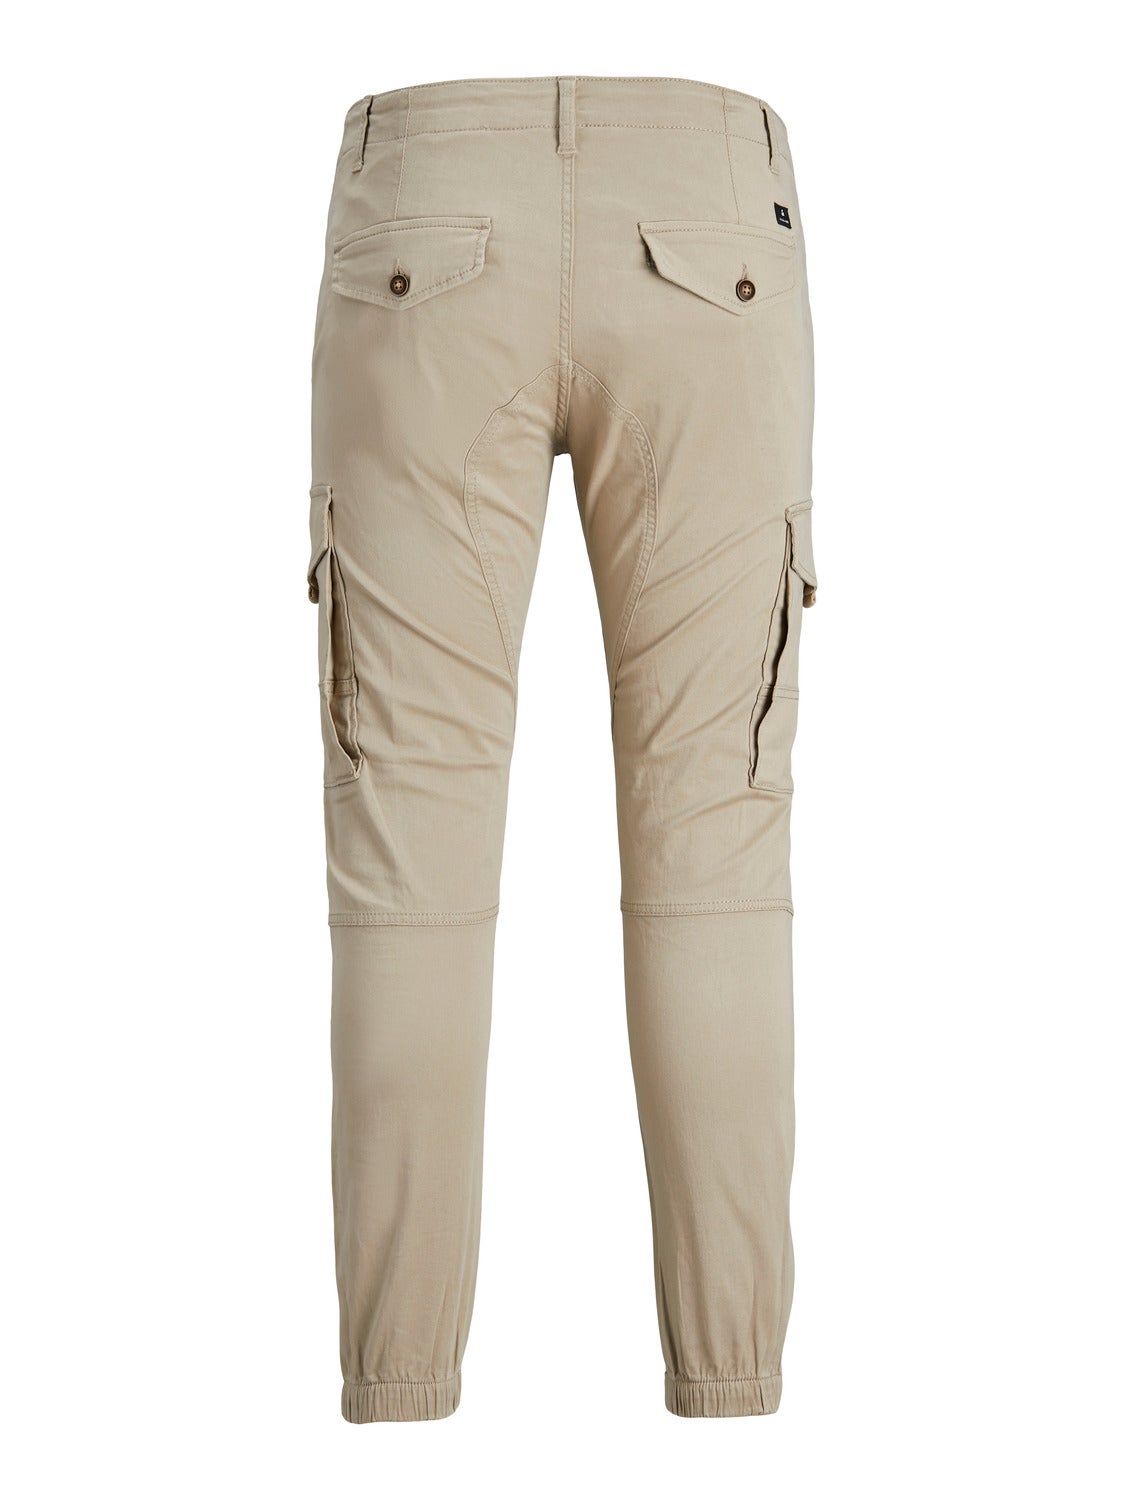 Buy Jack & Jones Men Green Camouflage Cargo Trousers - Trousers for Men  257632 | Myntra